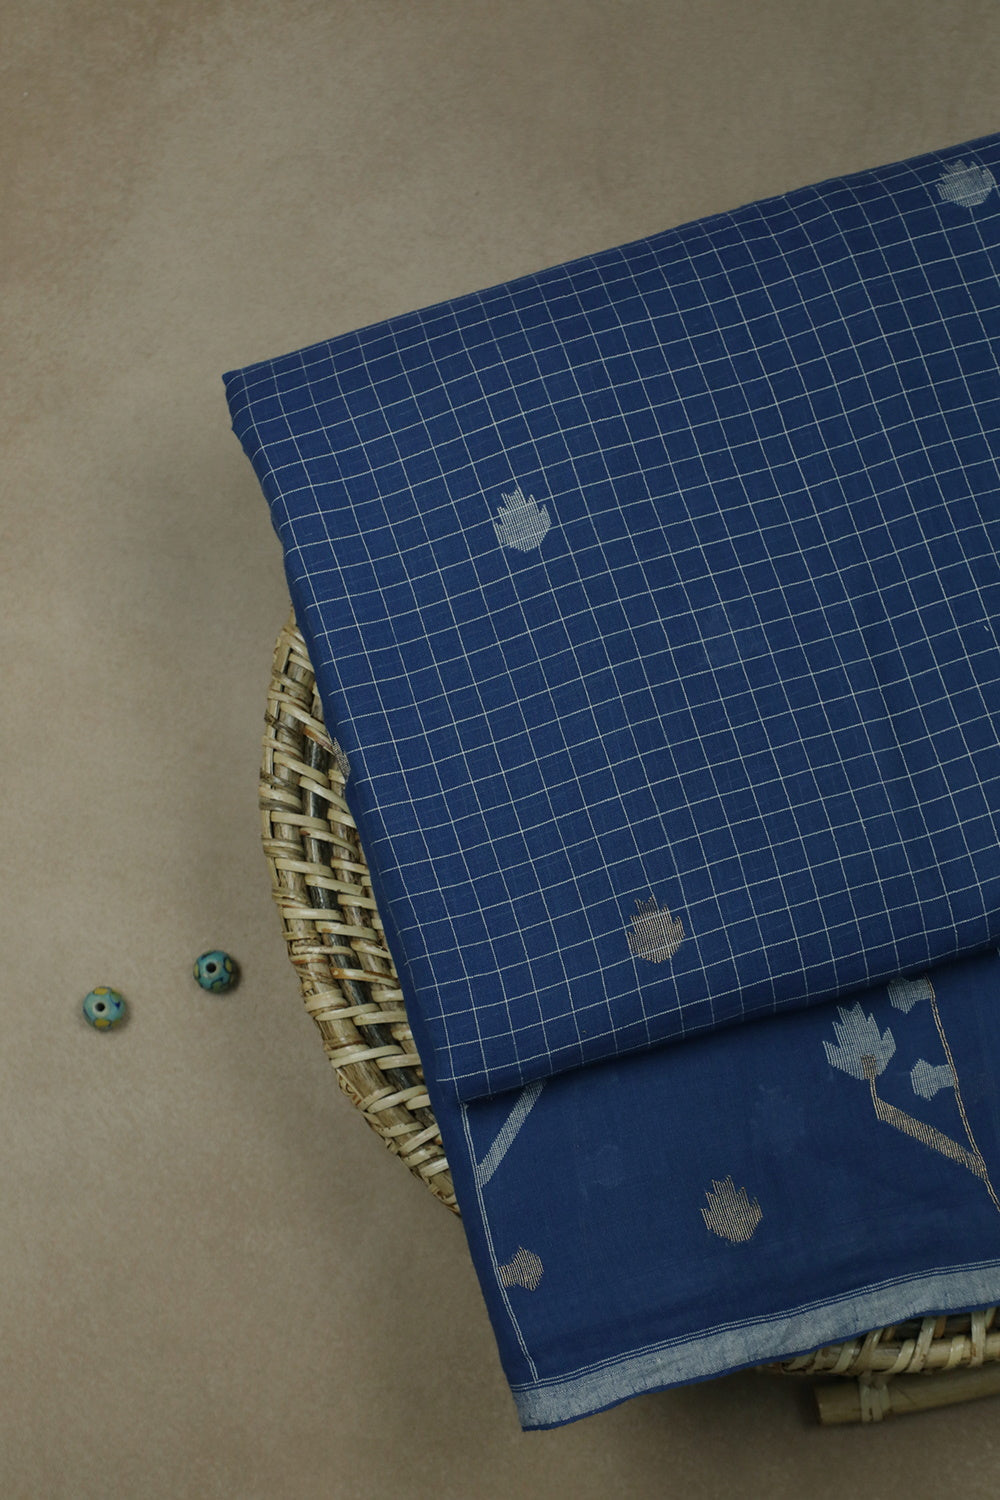 Handloom Fabric - Matkatus